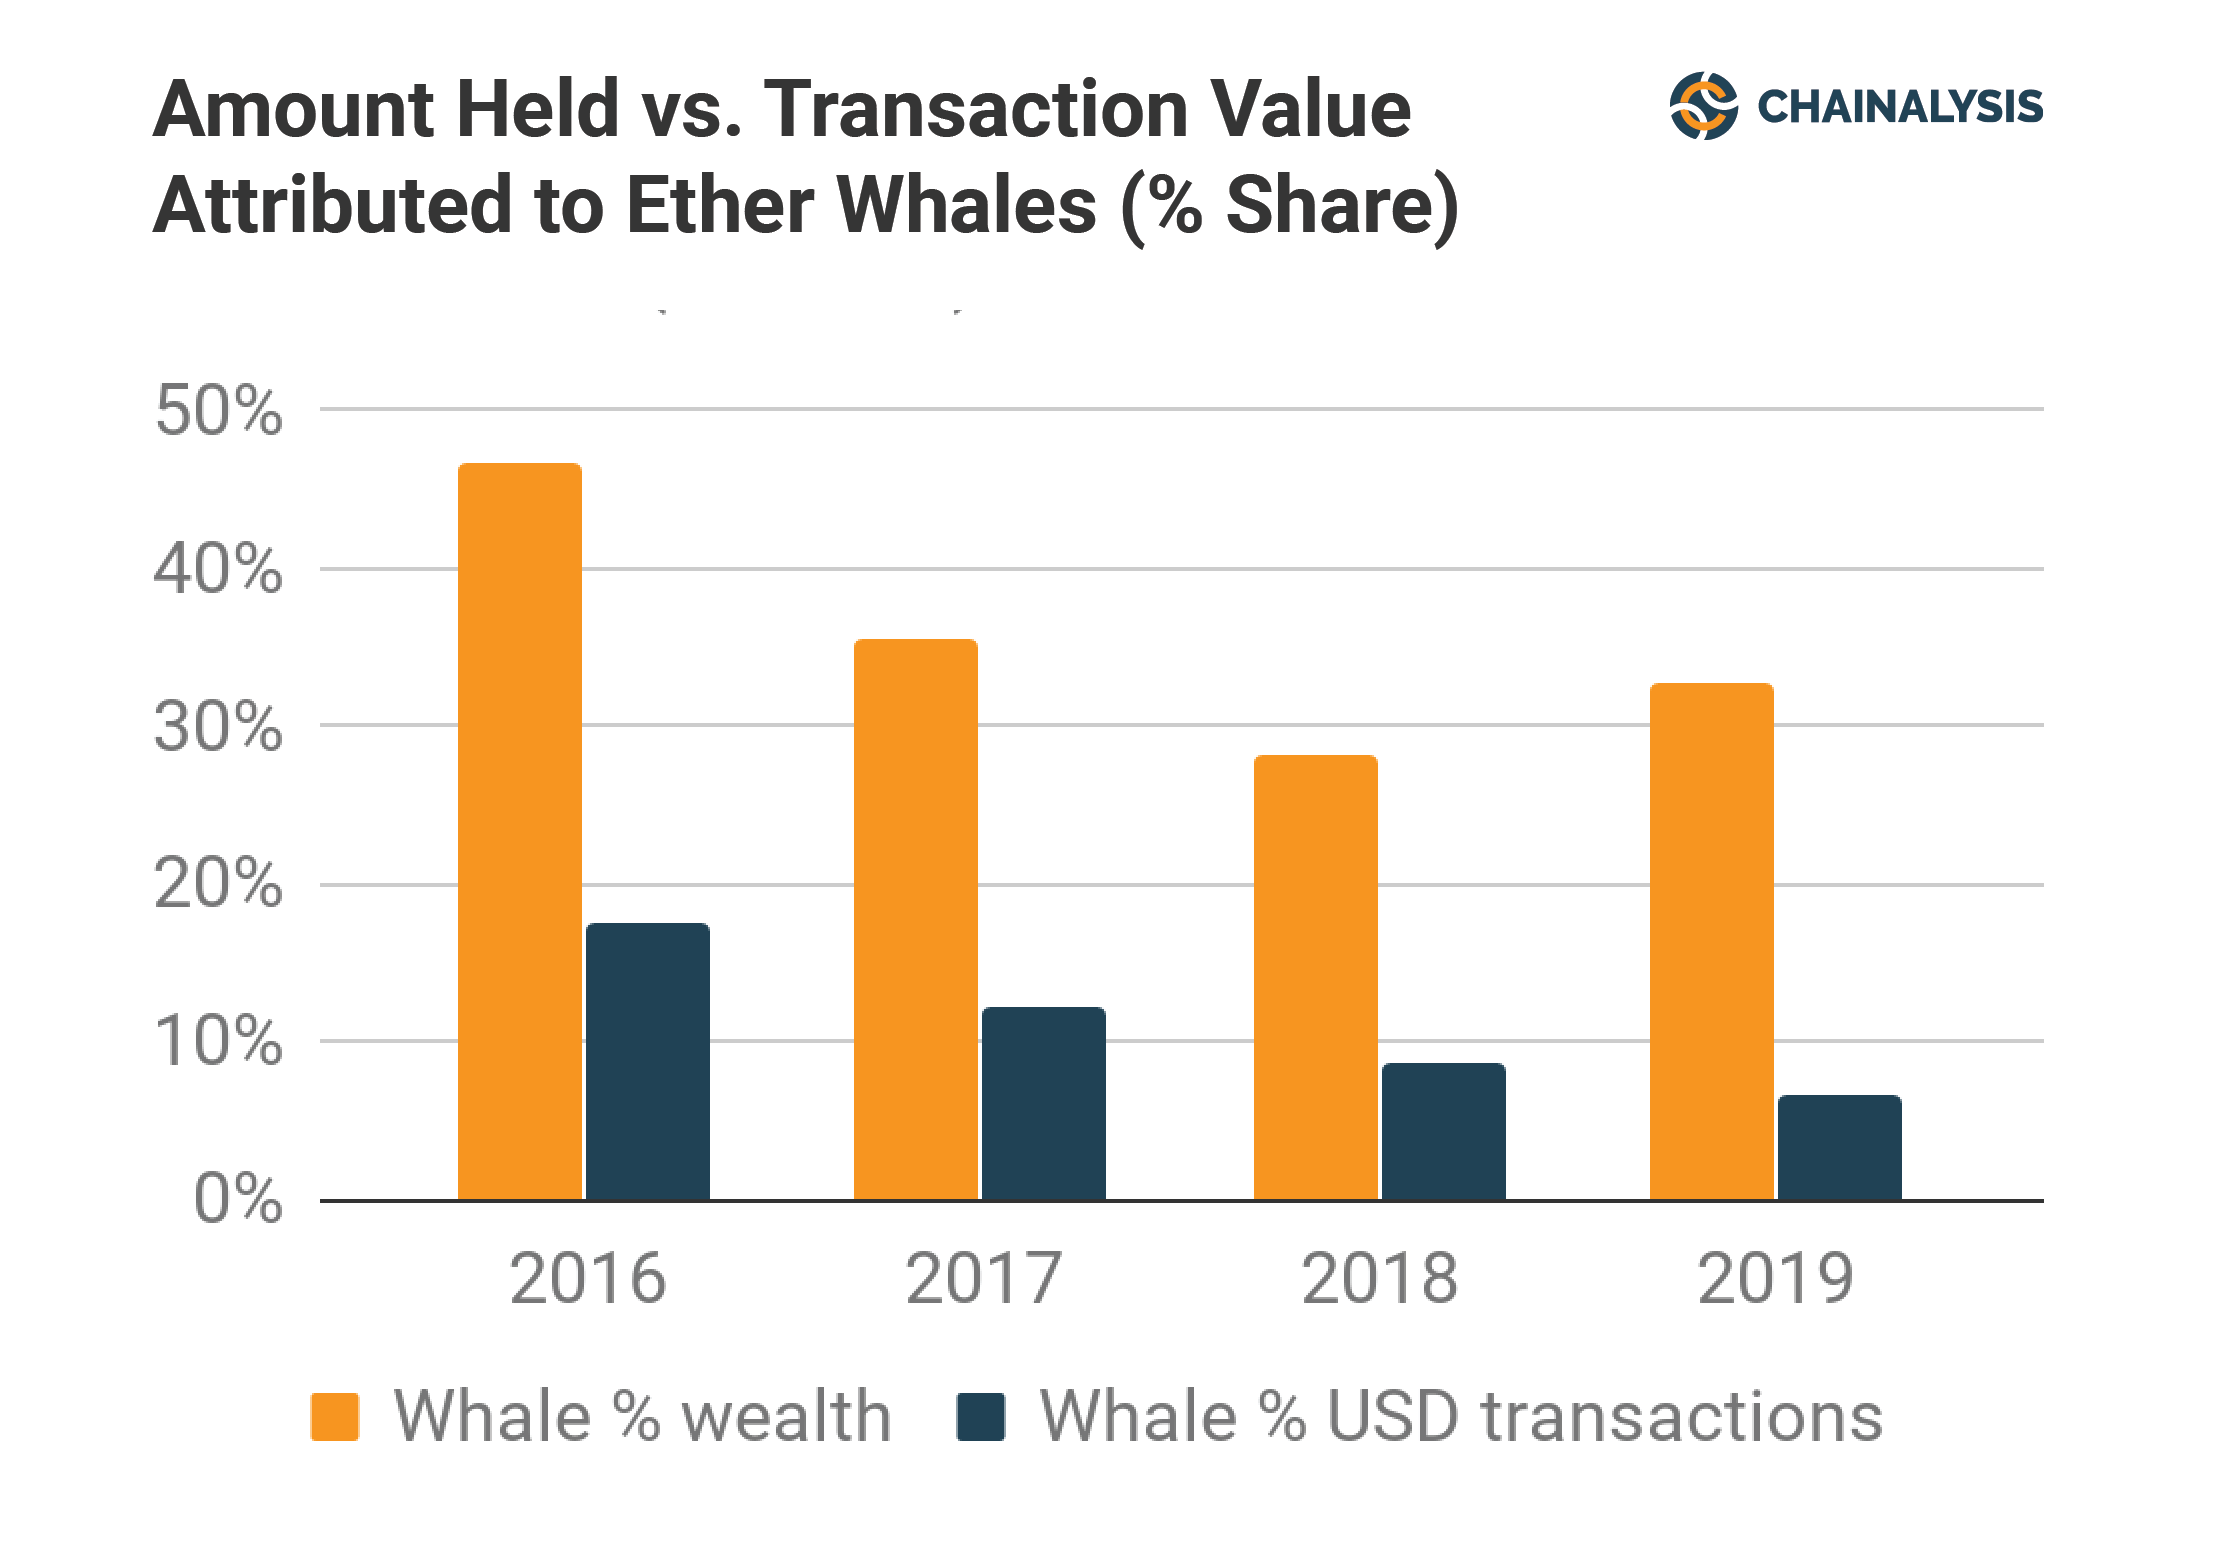 Amount held vs Transaction value